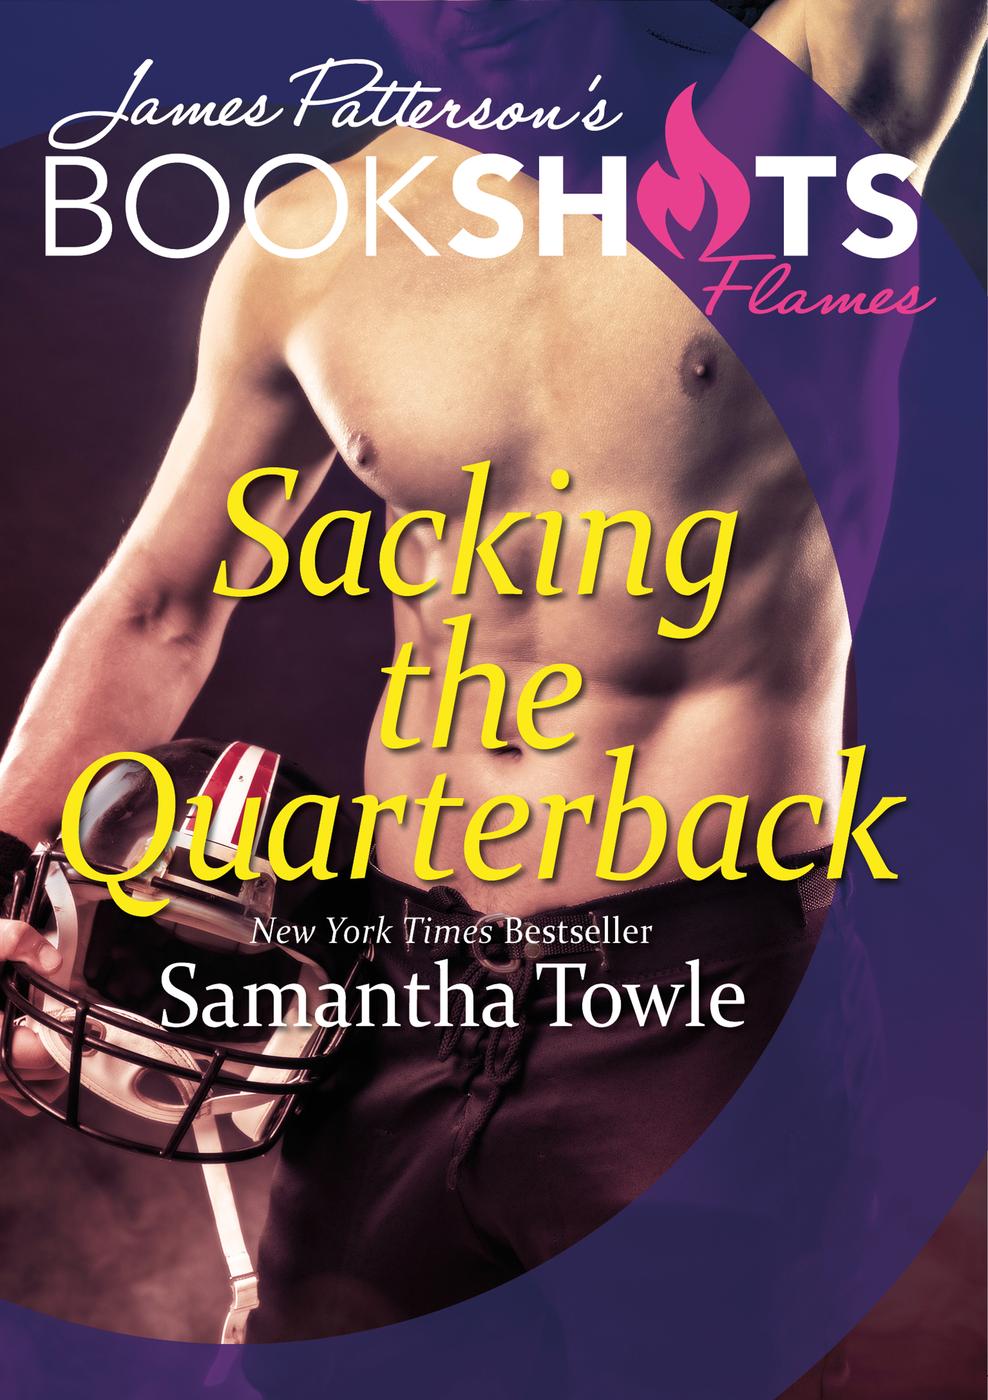 Sacking the Quarterback (2016) by Samantha Towle